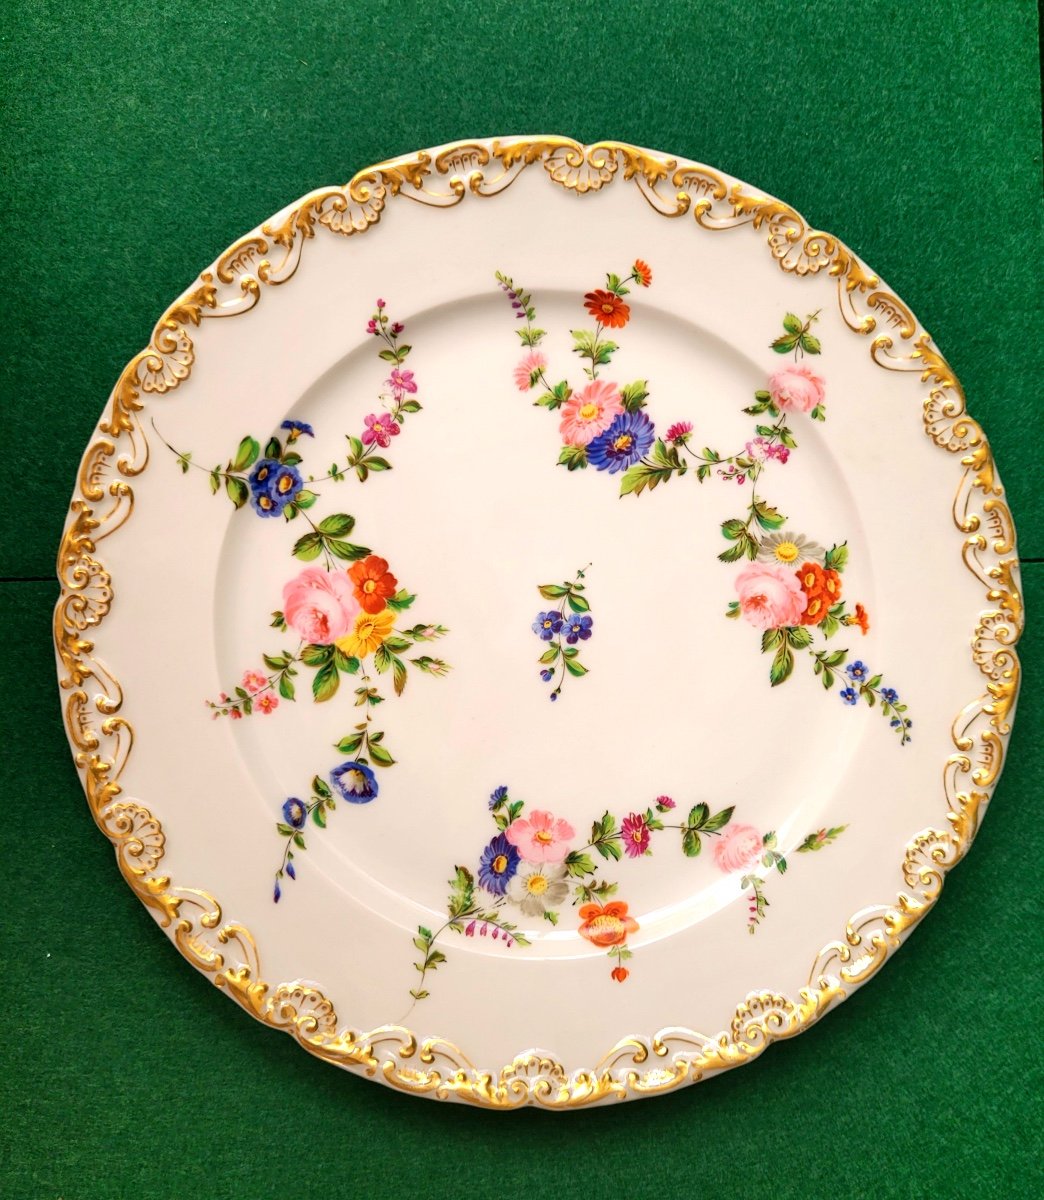 Jacob Petit-porcelain From Paris-monogrammed Plate-floral Decor And Gilding